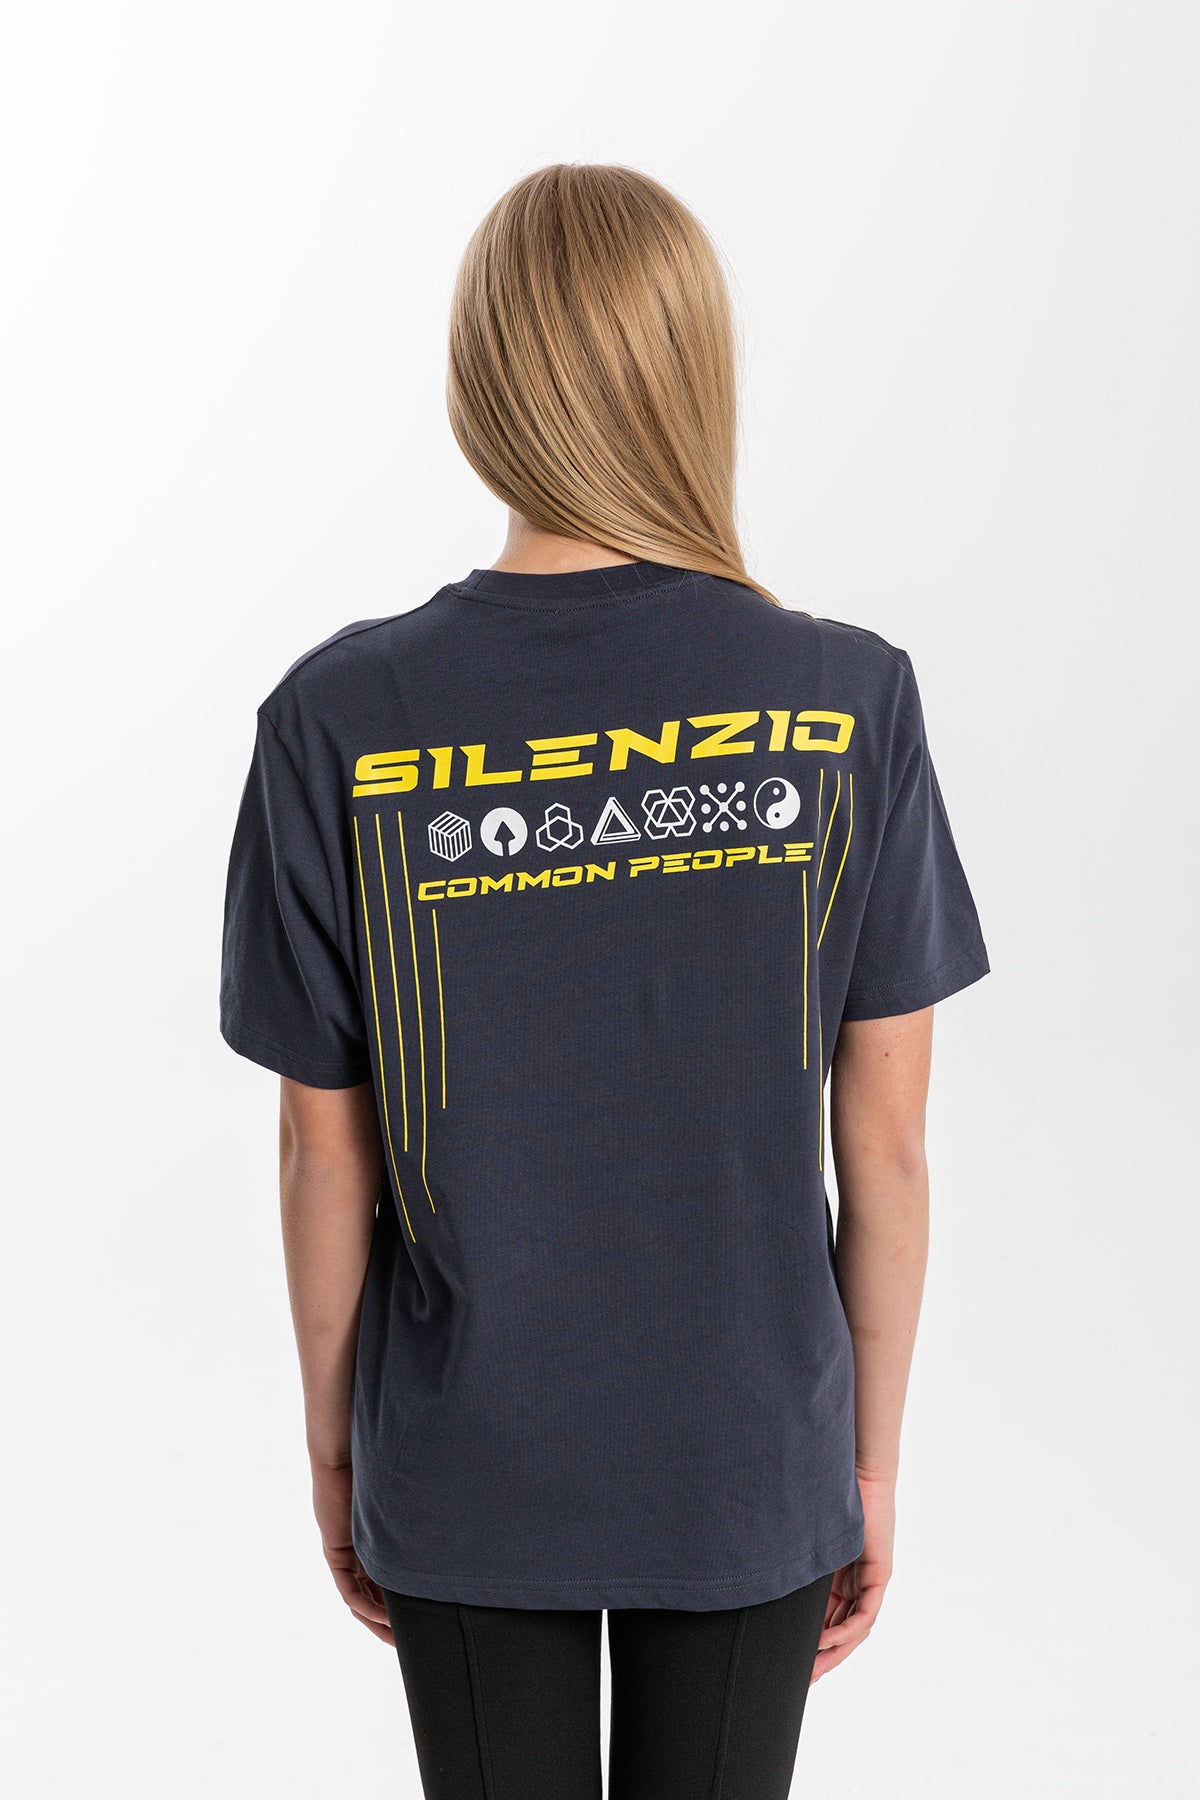 Silenzio Antrasit Oversize T-shirt